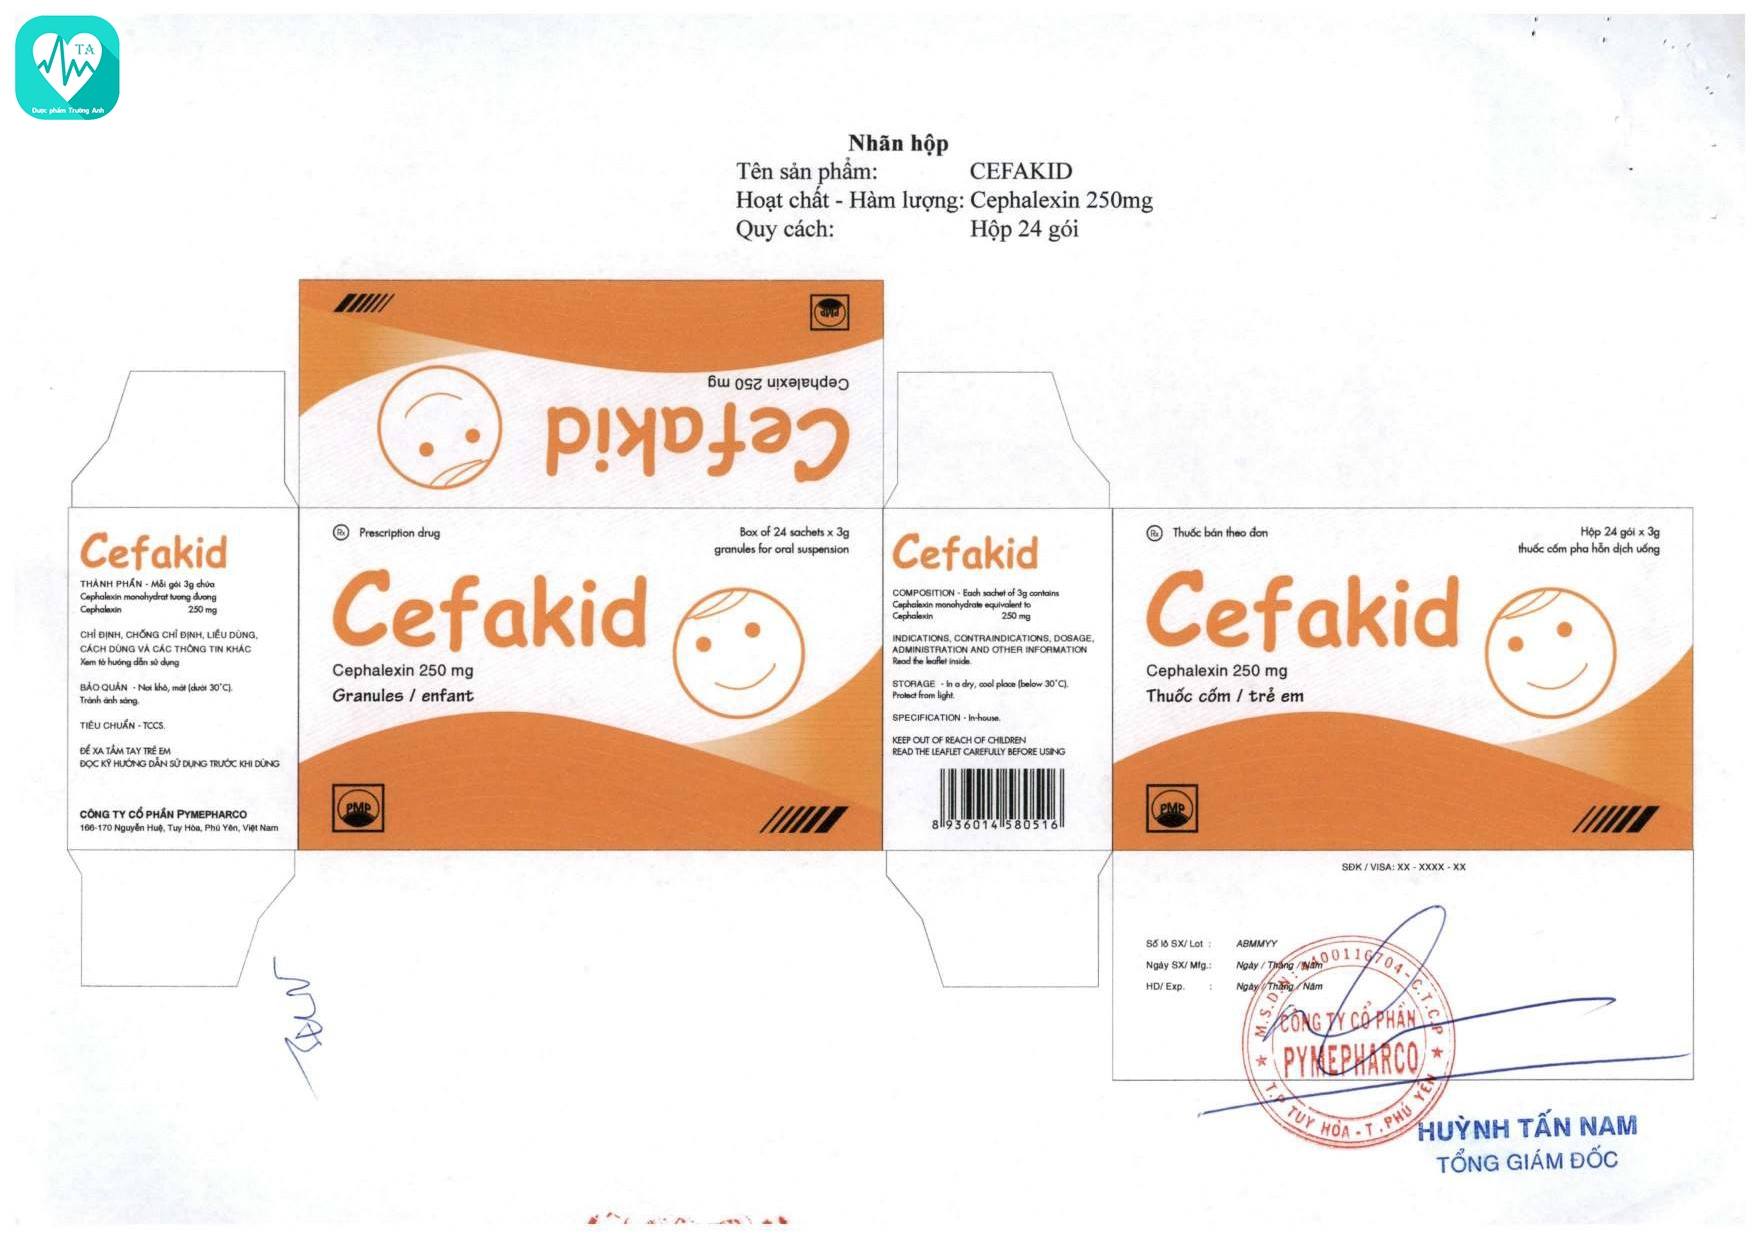 Cefakid - Thuốc điều trị nhiễm khuẩn hiệu quả của Pymepharco